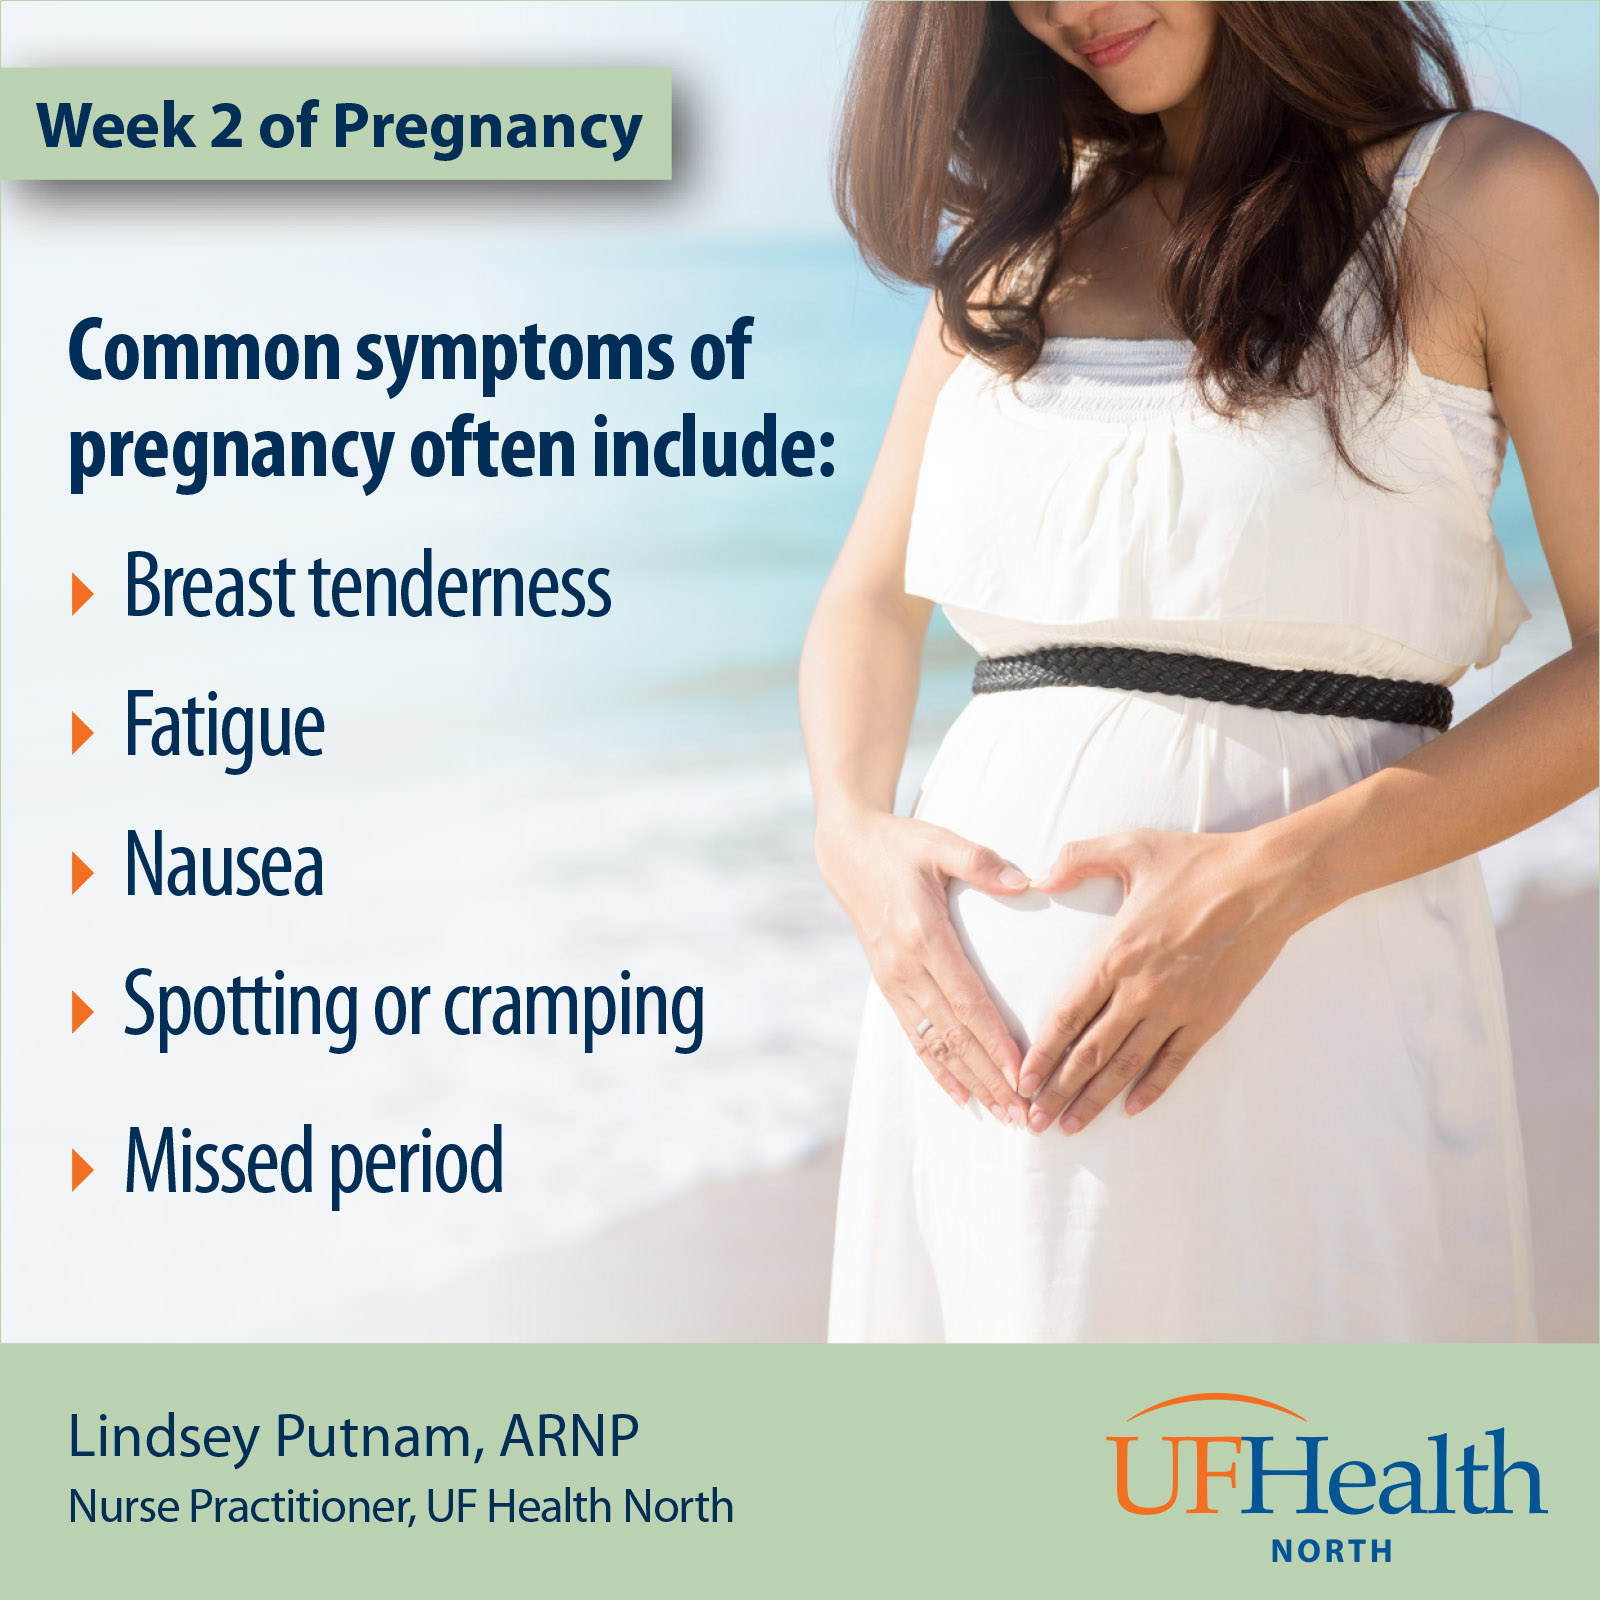 UF Health North pregnancy tip 2